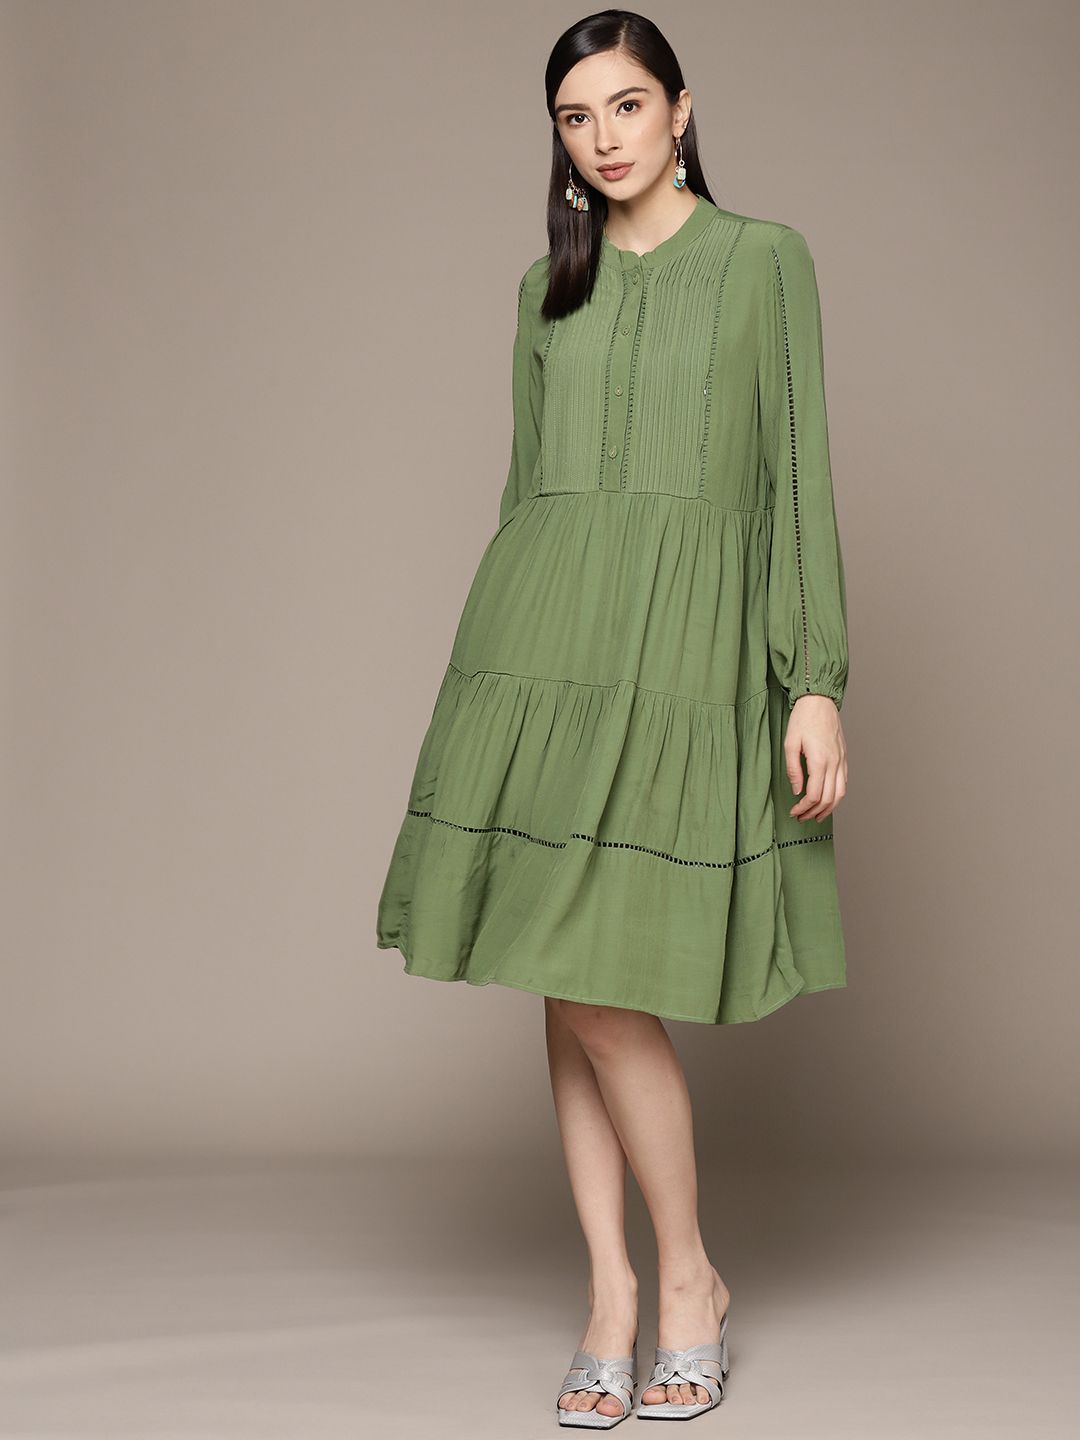 Ritu Kumar Olive Green Solid Tiered A-Line Midi Dress Price in India